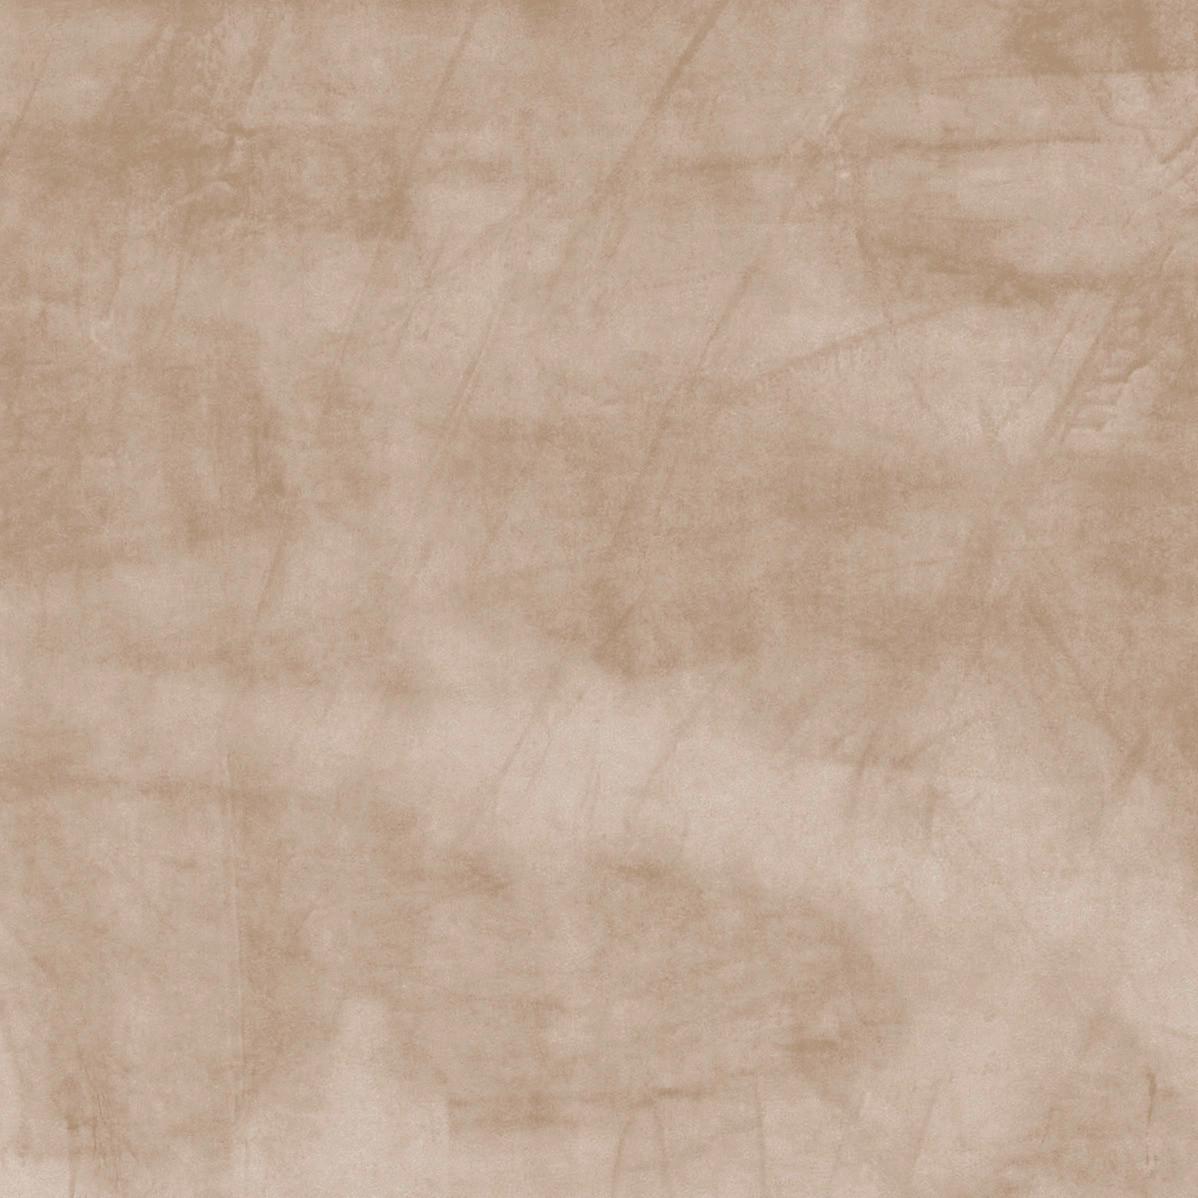 Fertigvorhang Viola in Beige ca. 140x245cm - Beige, KONVENTIONELL, Textil (140/245cm) - Premium Living